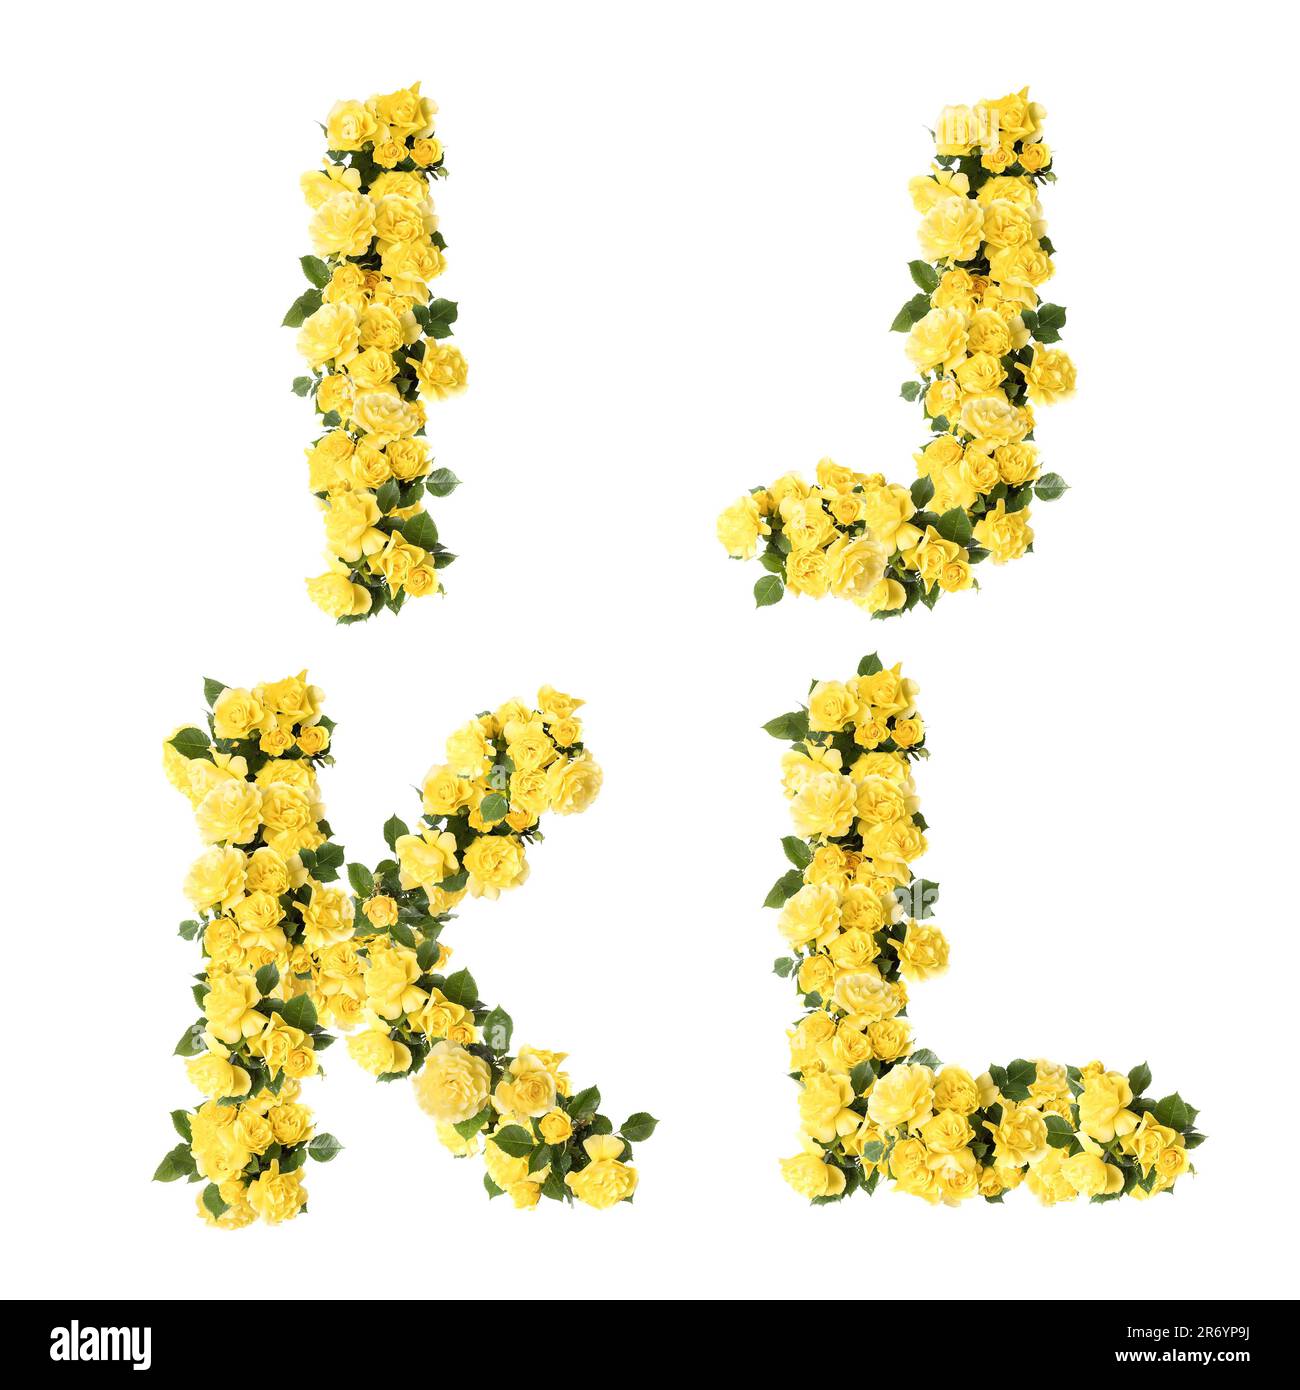 3D illustration of yellow rose flowers capital letter alphabet - letters I-L Stock Photo